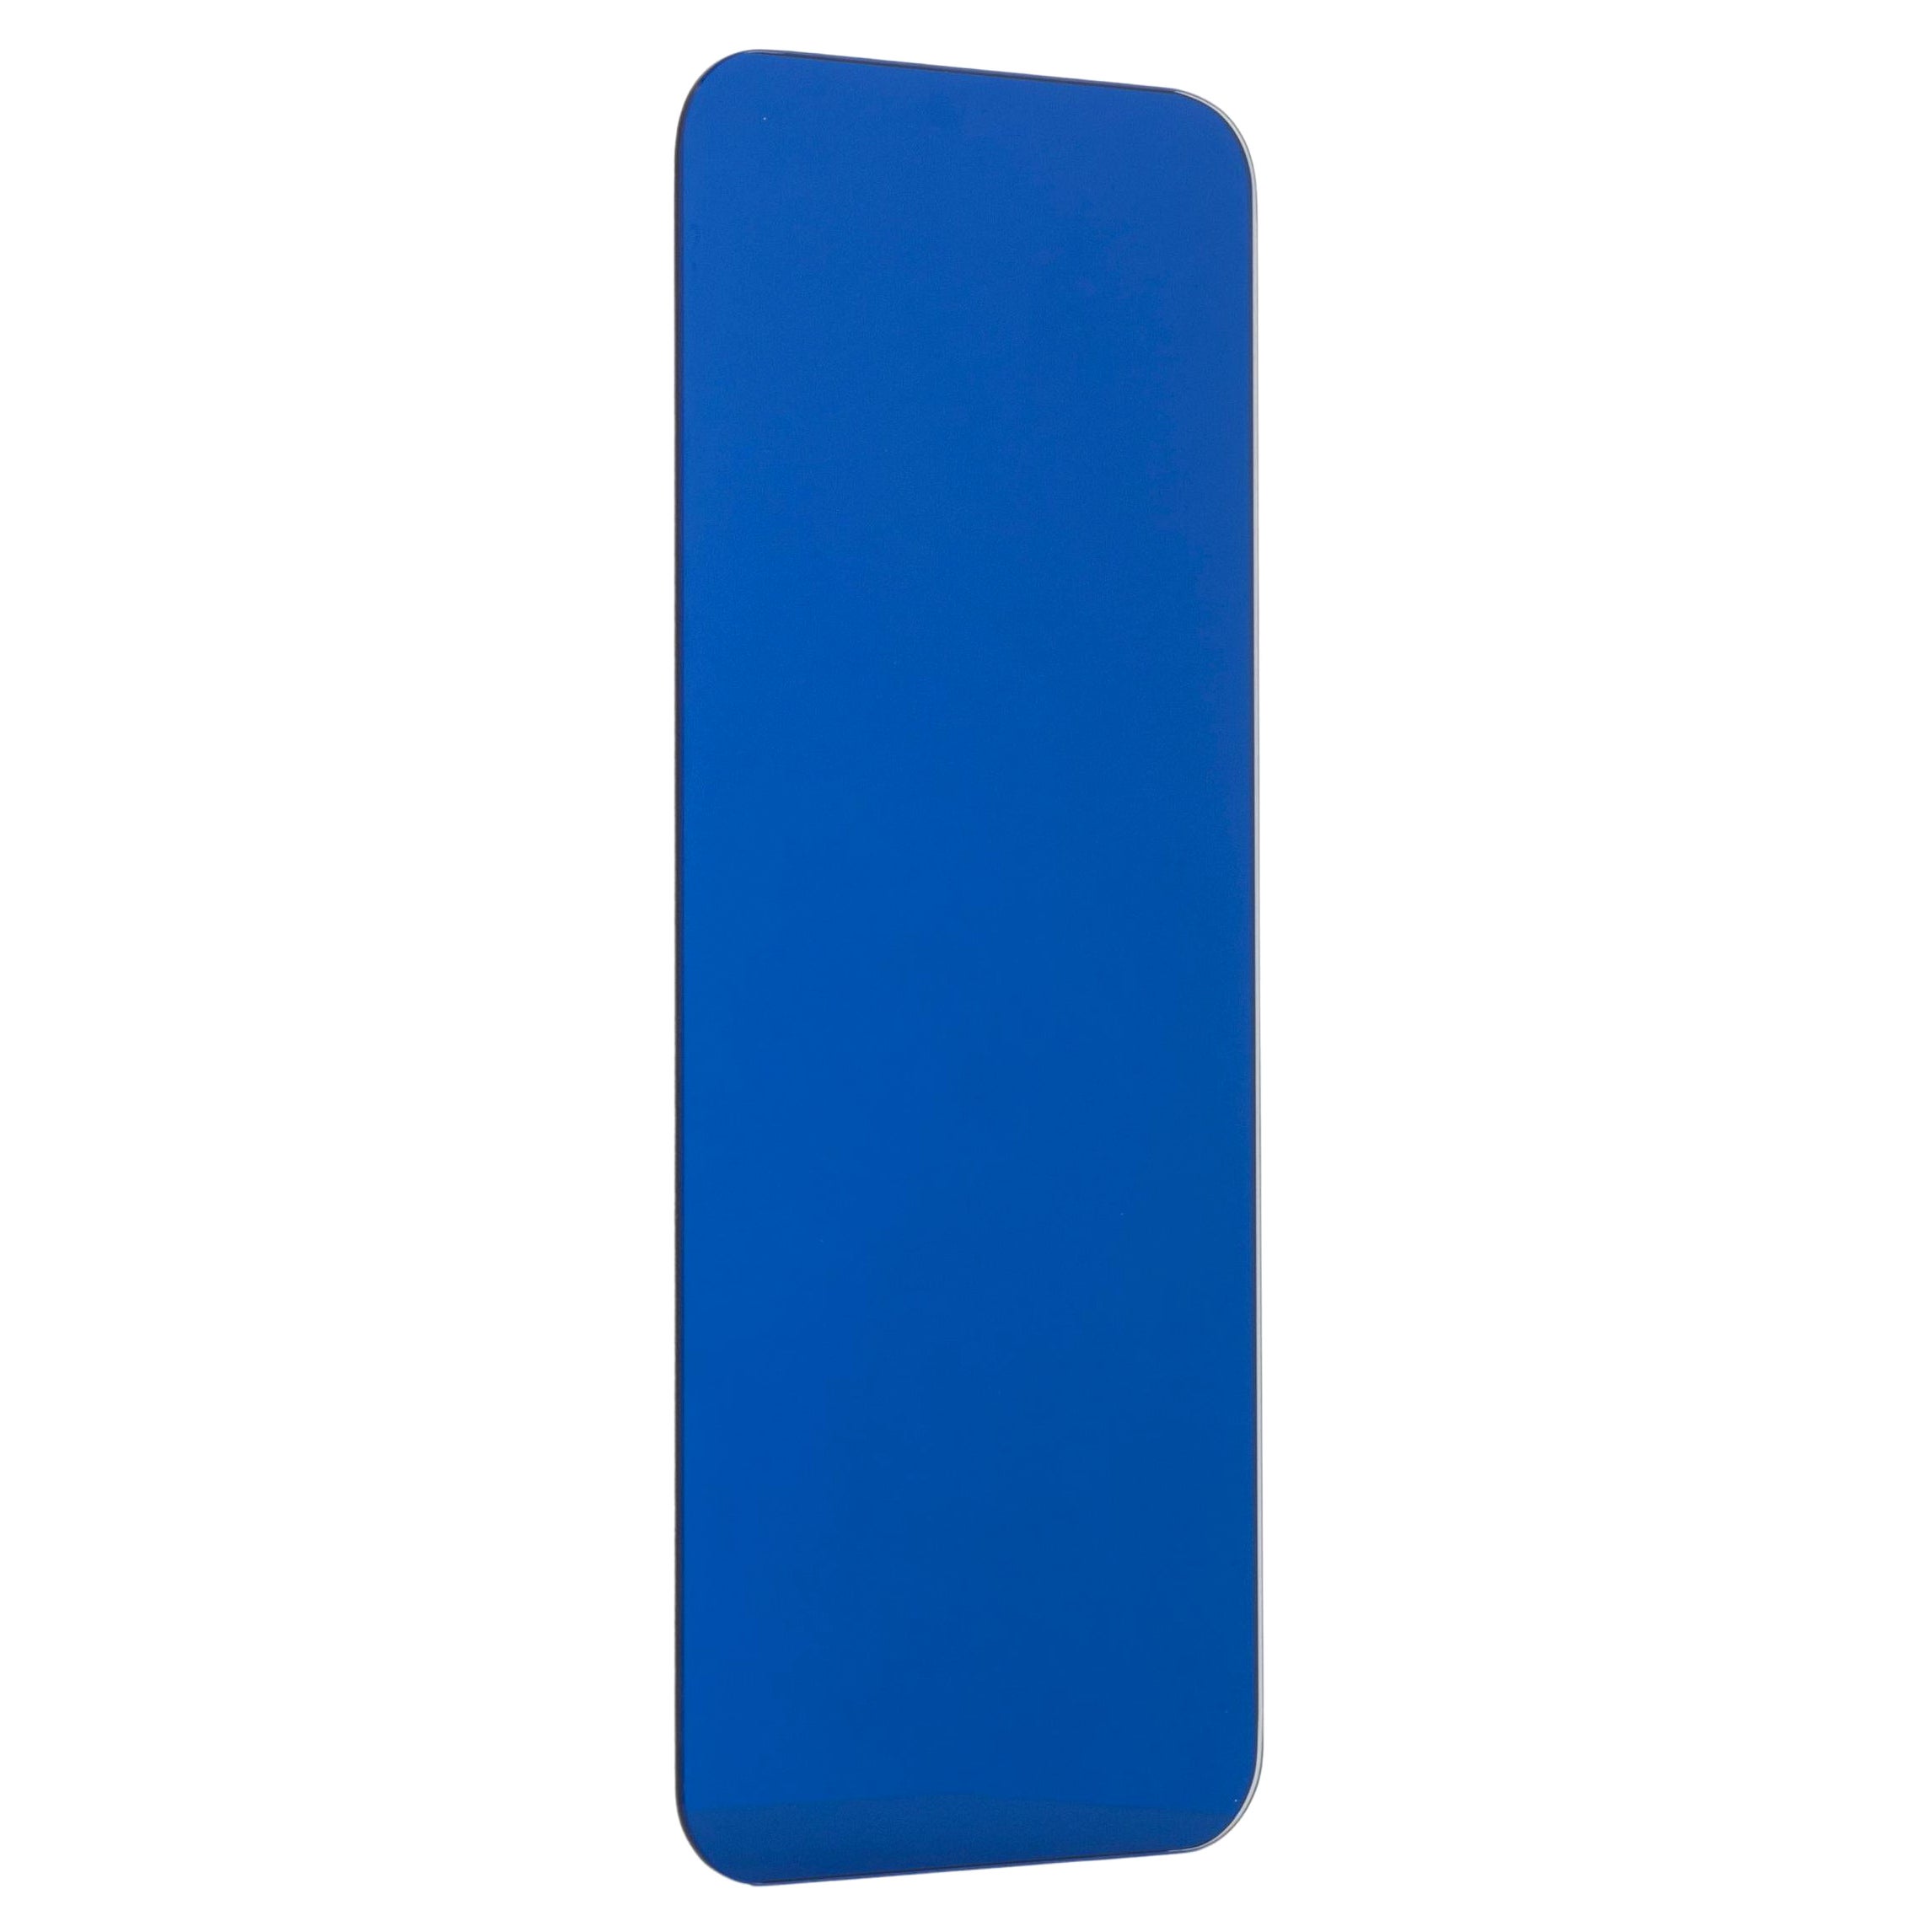 Quadris Blue Rectangular Frameless Minimalist Mirror, Large For Sale